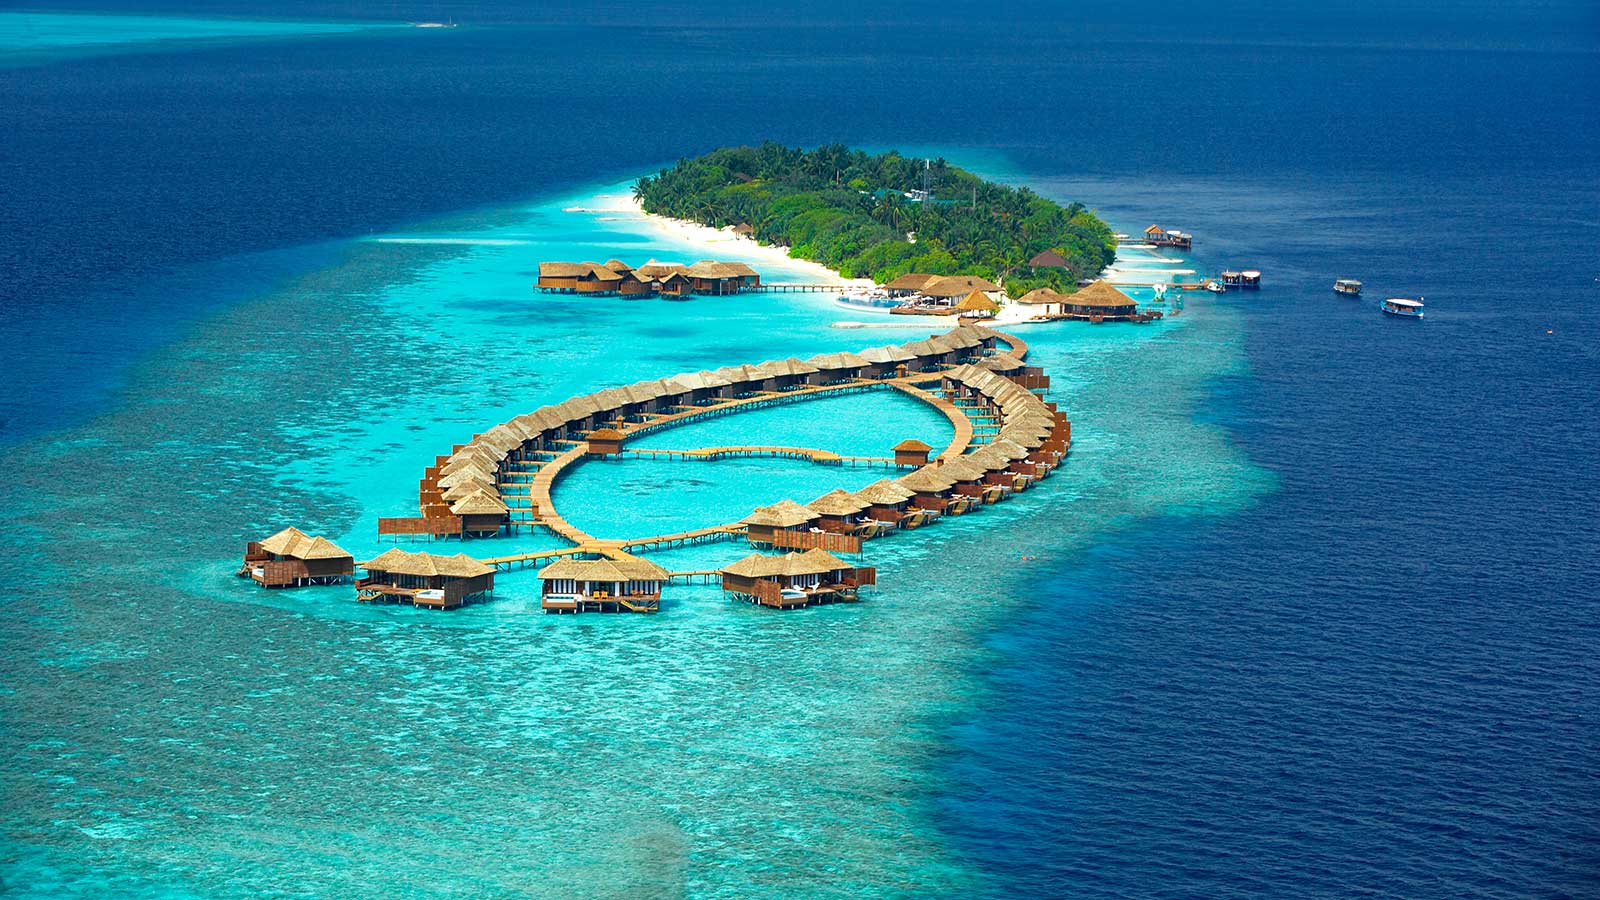 Photo Credit: Lily Beach Resort & Spa Maldives via Google Images